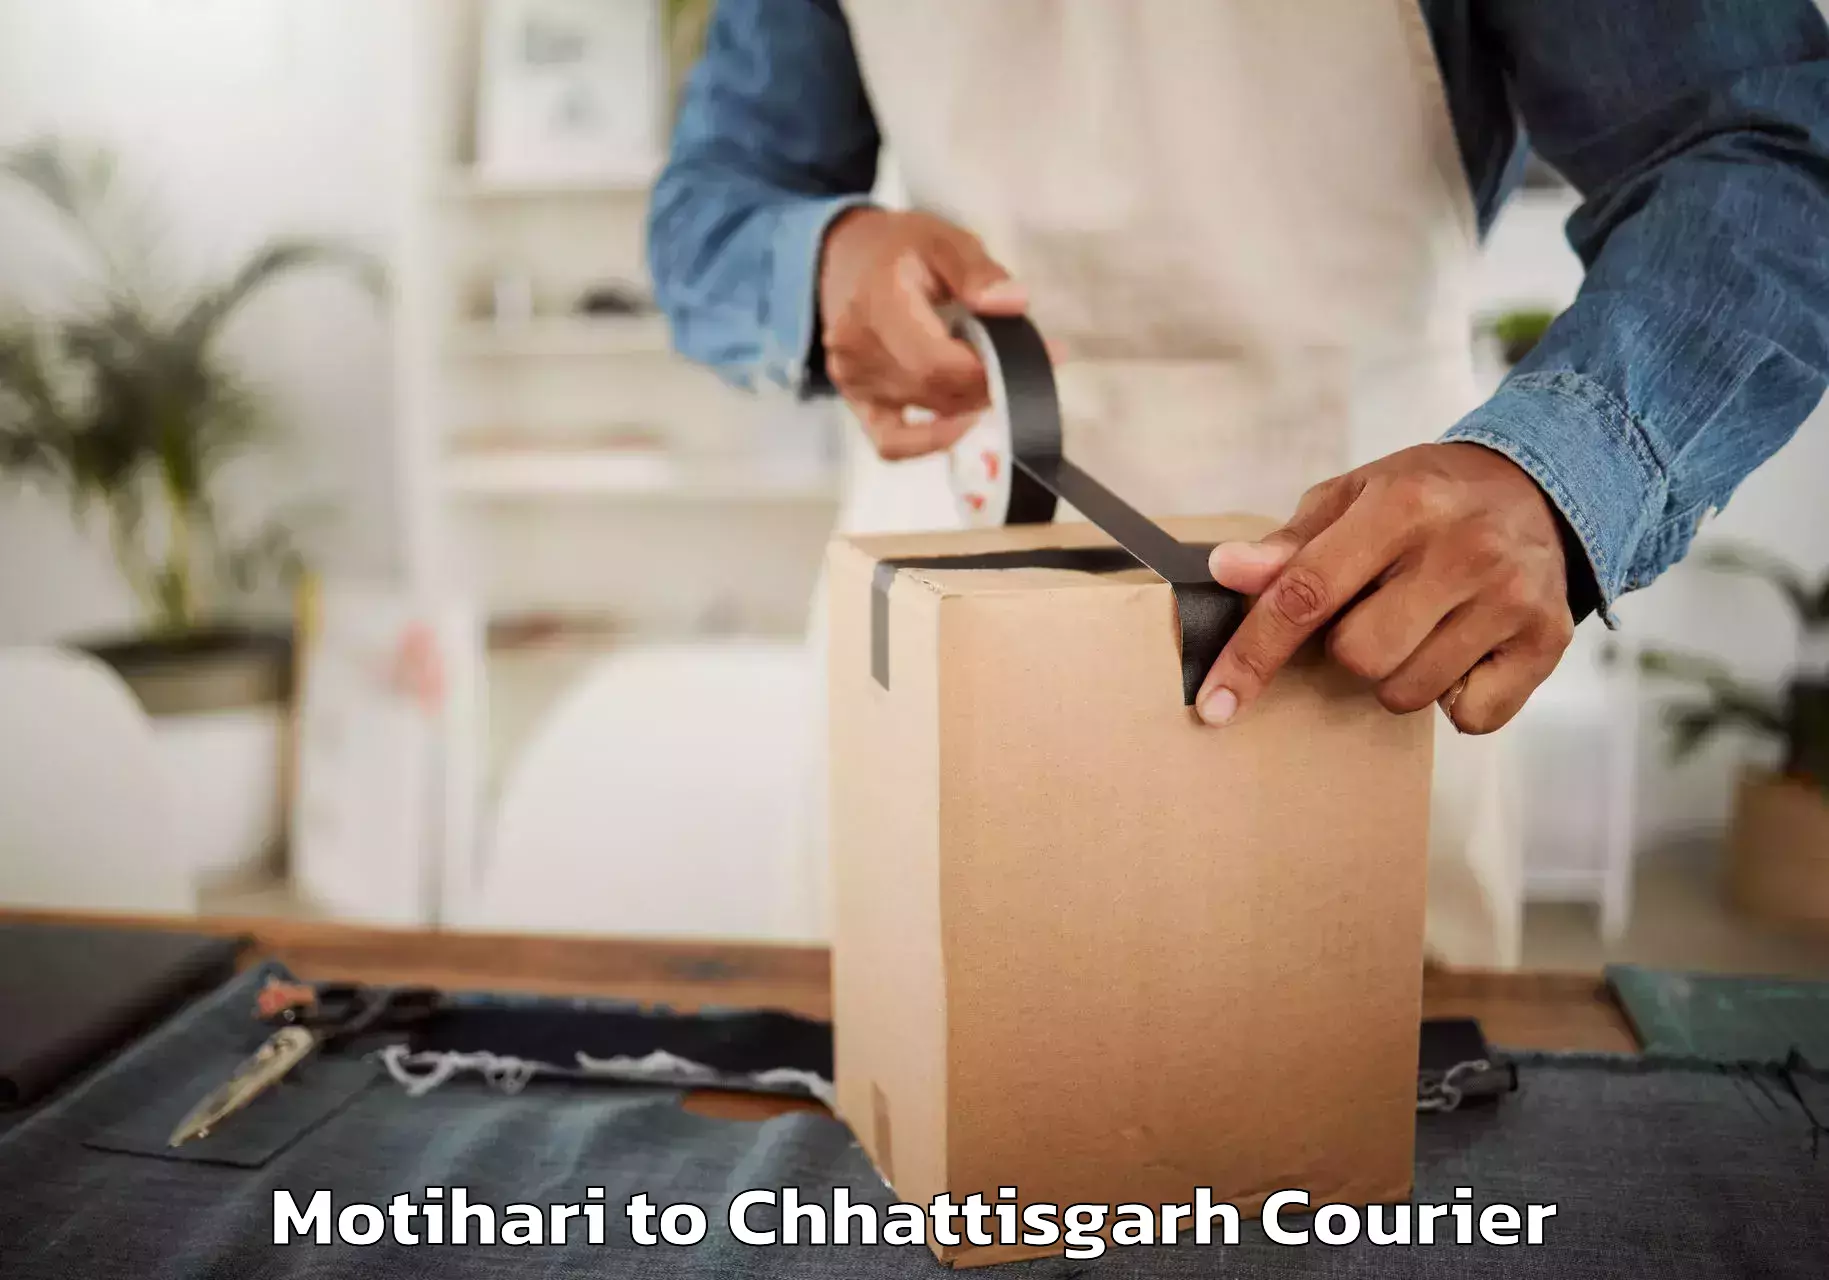 Furniture delivery service Motihari to Kawardha